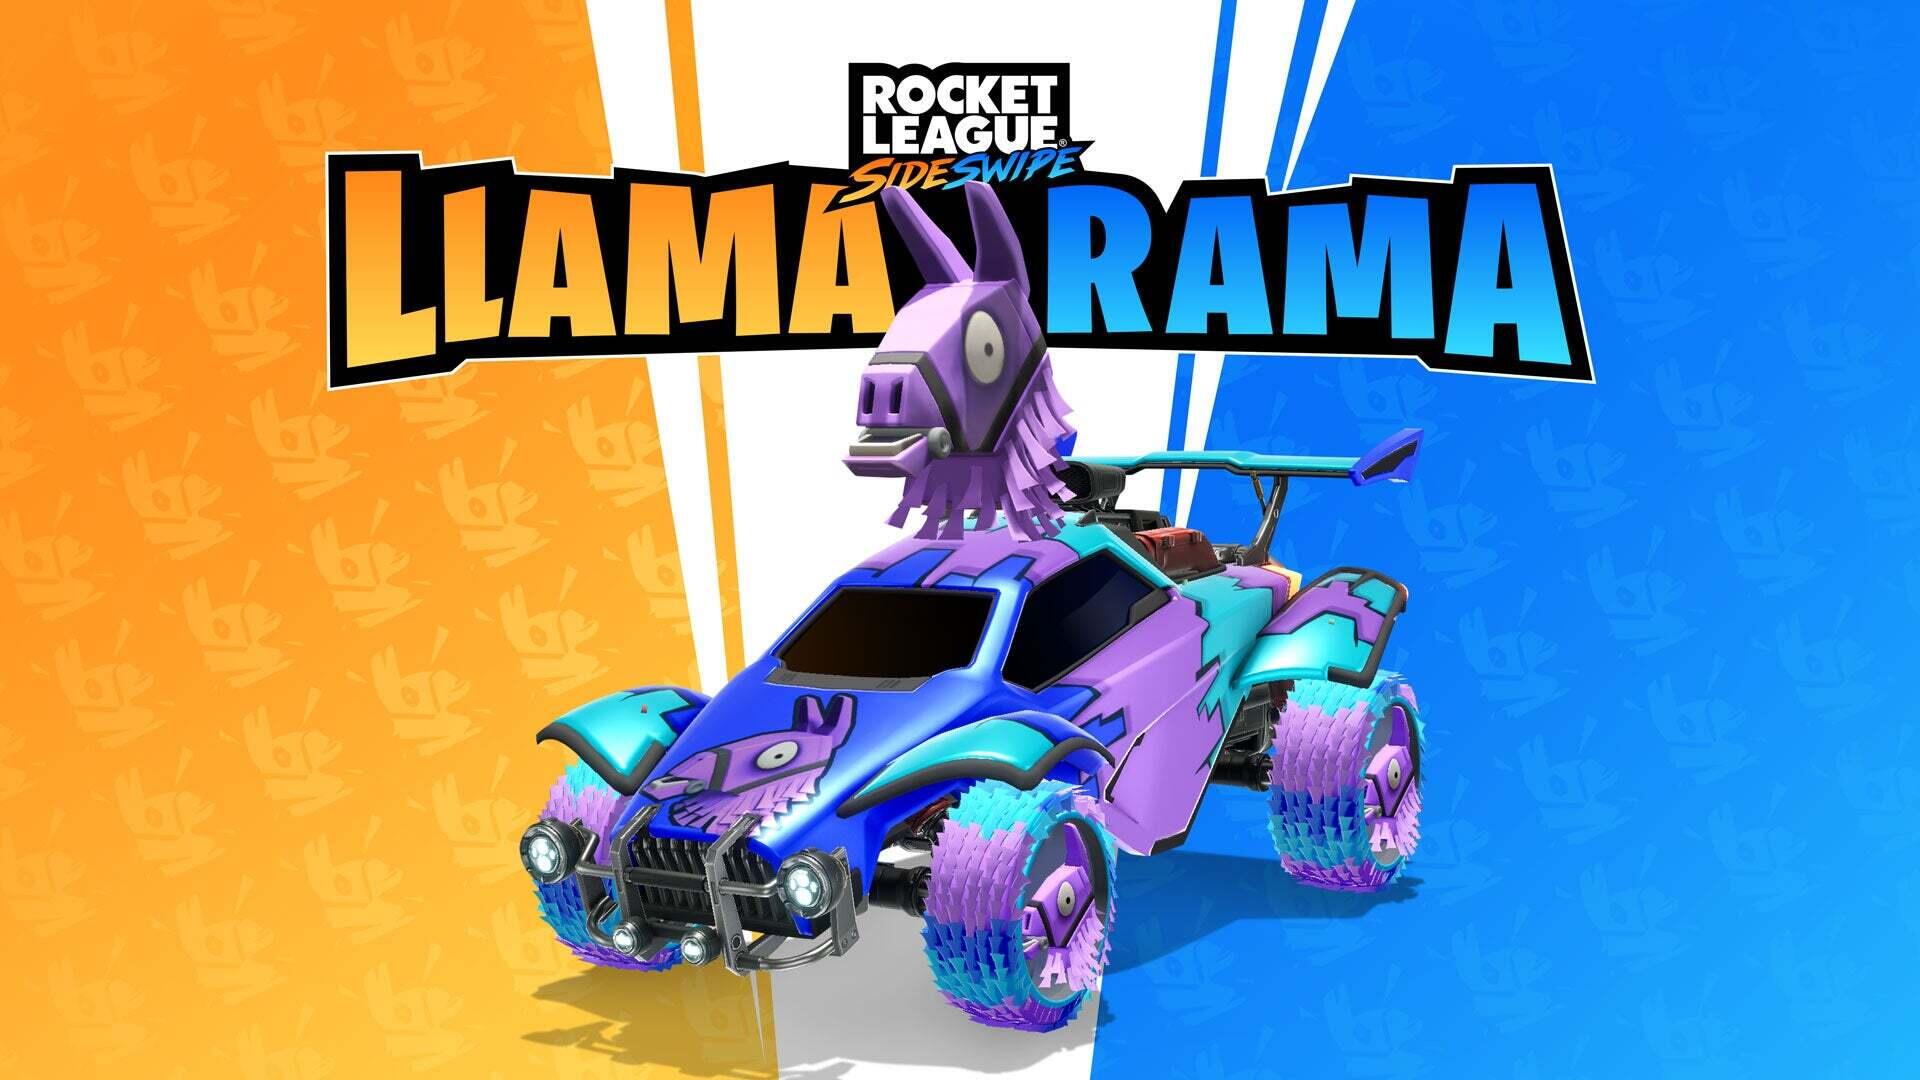 Goditi il Llama-Rama in Rocket League Sideswipe Image